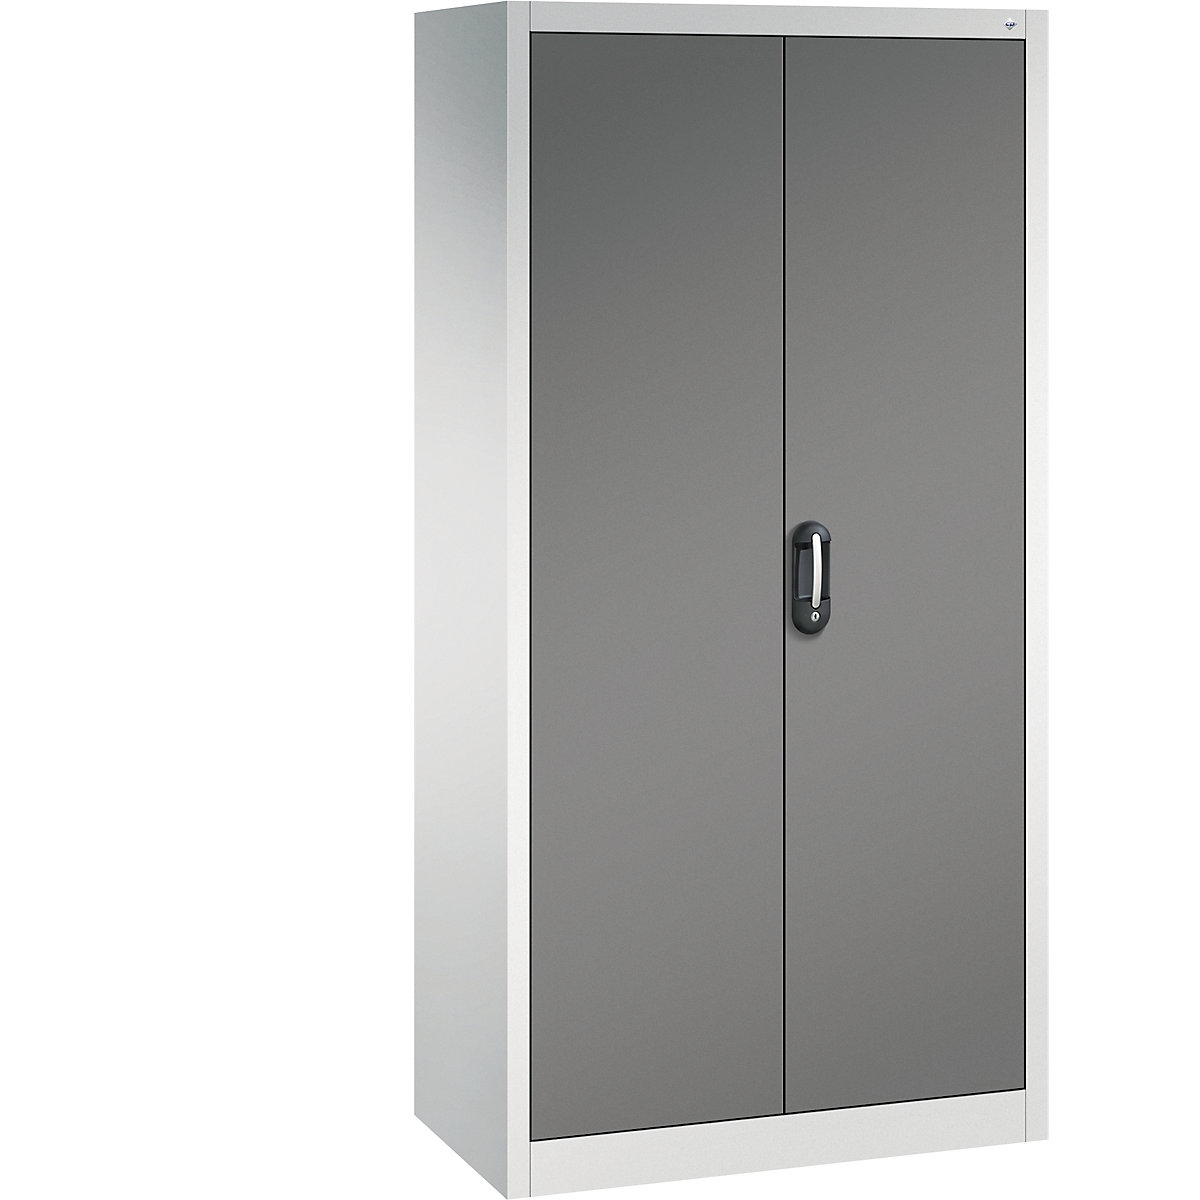 ACURADO universal cupboard – C+P, WxD 930 x 500 mm, light grey / volcanic grey-11